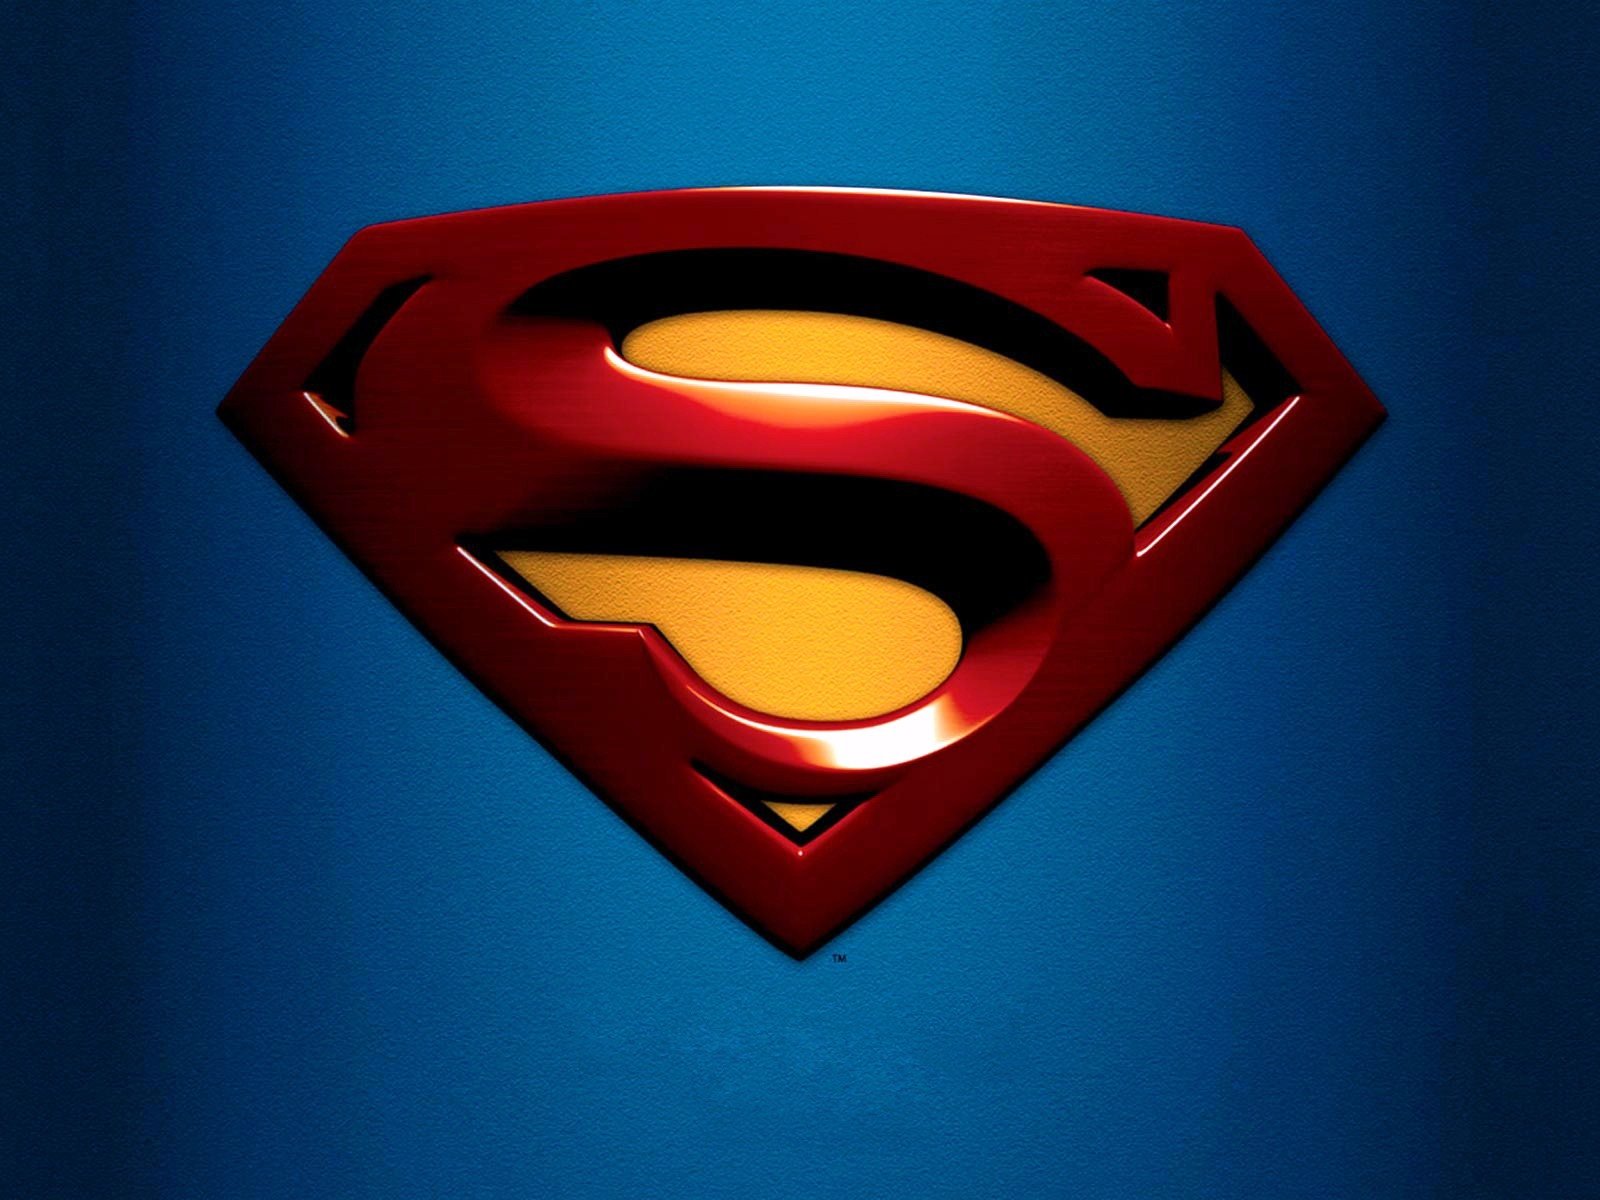 Superman Wallpaper - NawPic